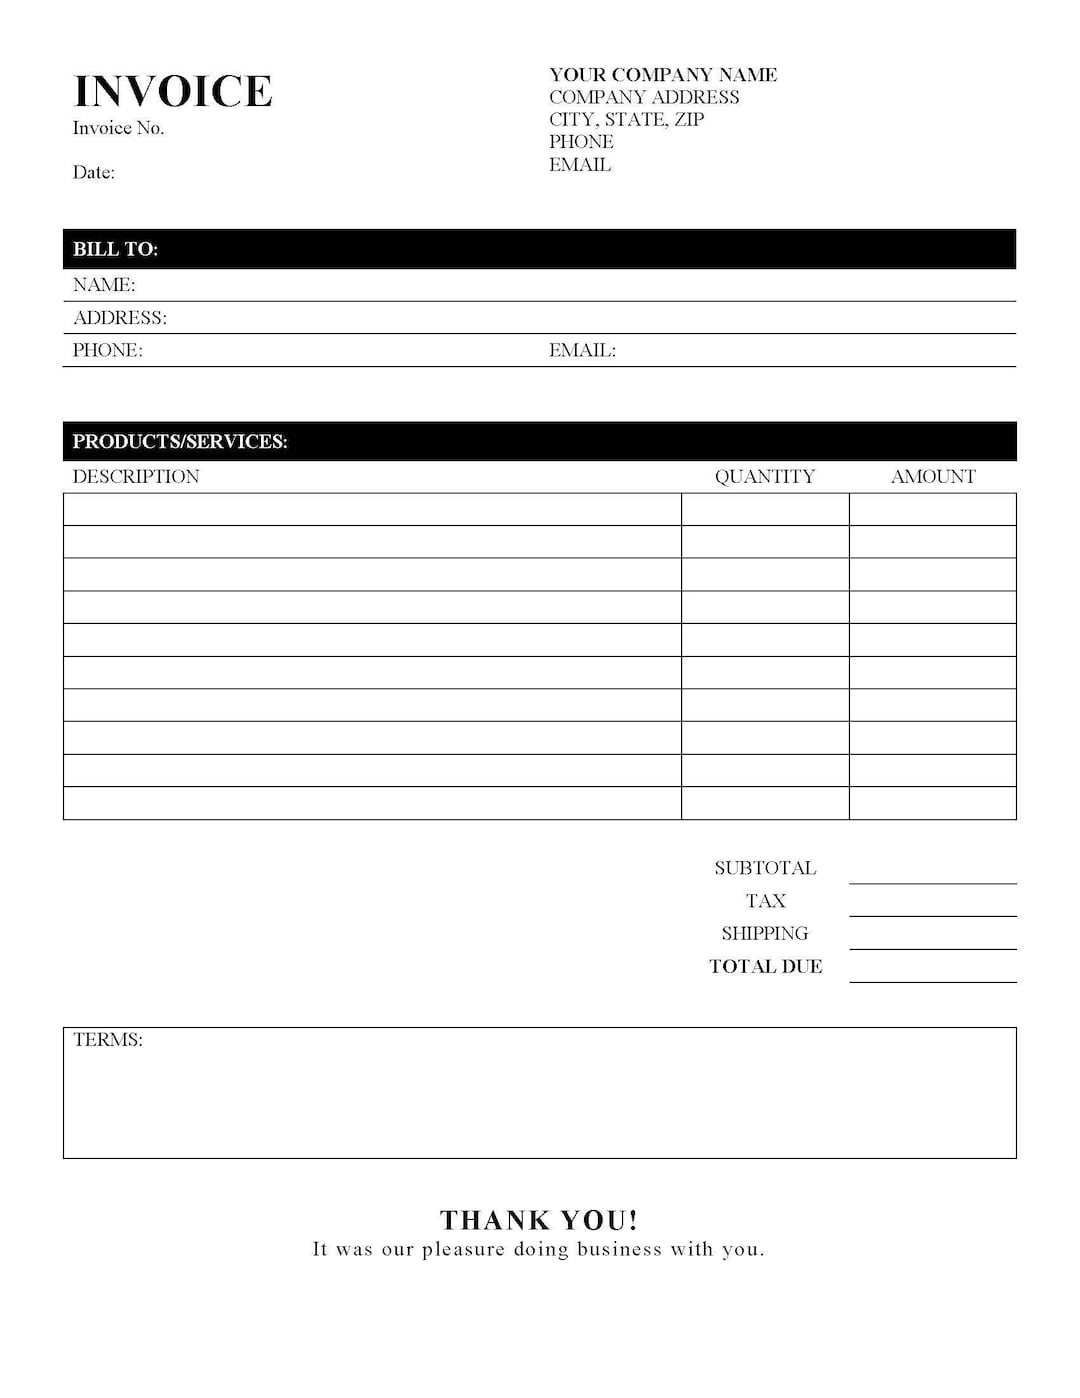 Invoice Template Printable Invoice Business Form Editable Invoice Receipt Microsoft Word Invoice Invoice Template Download Etsy - Free Bill Invoice Template Printable